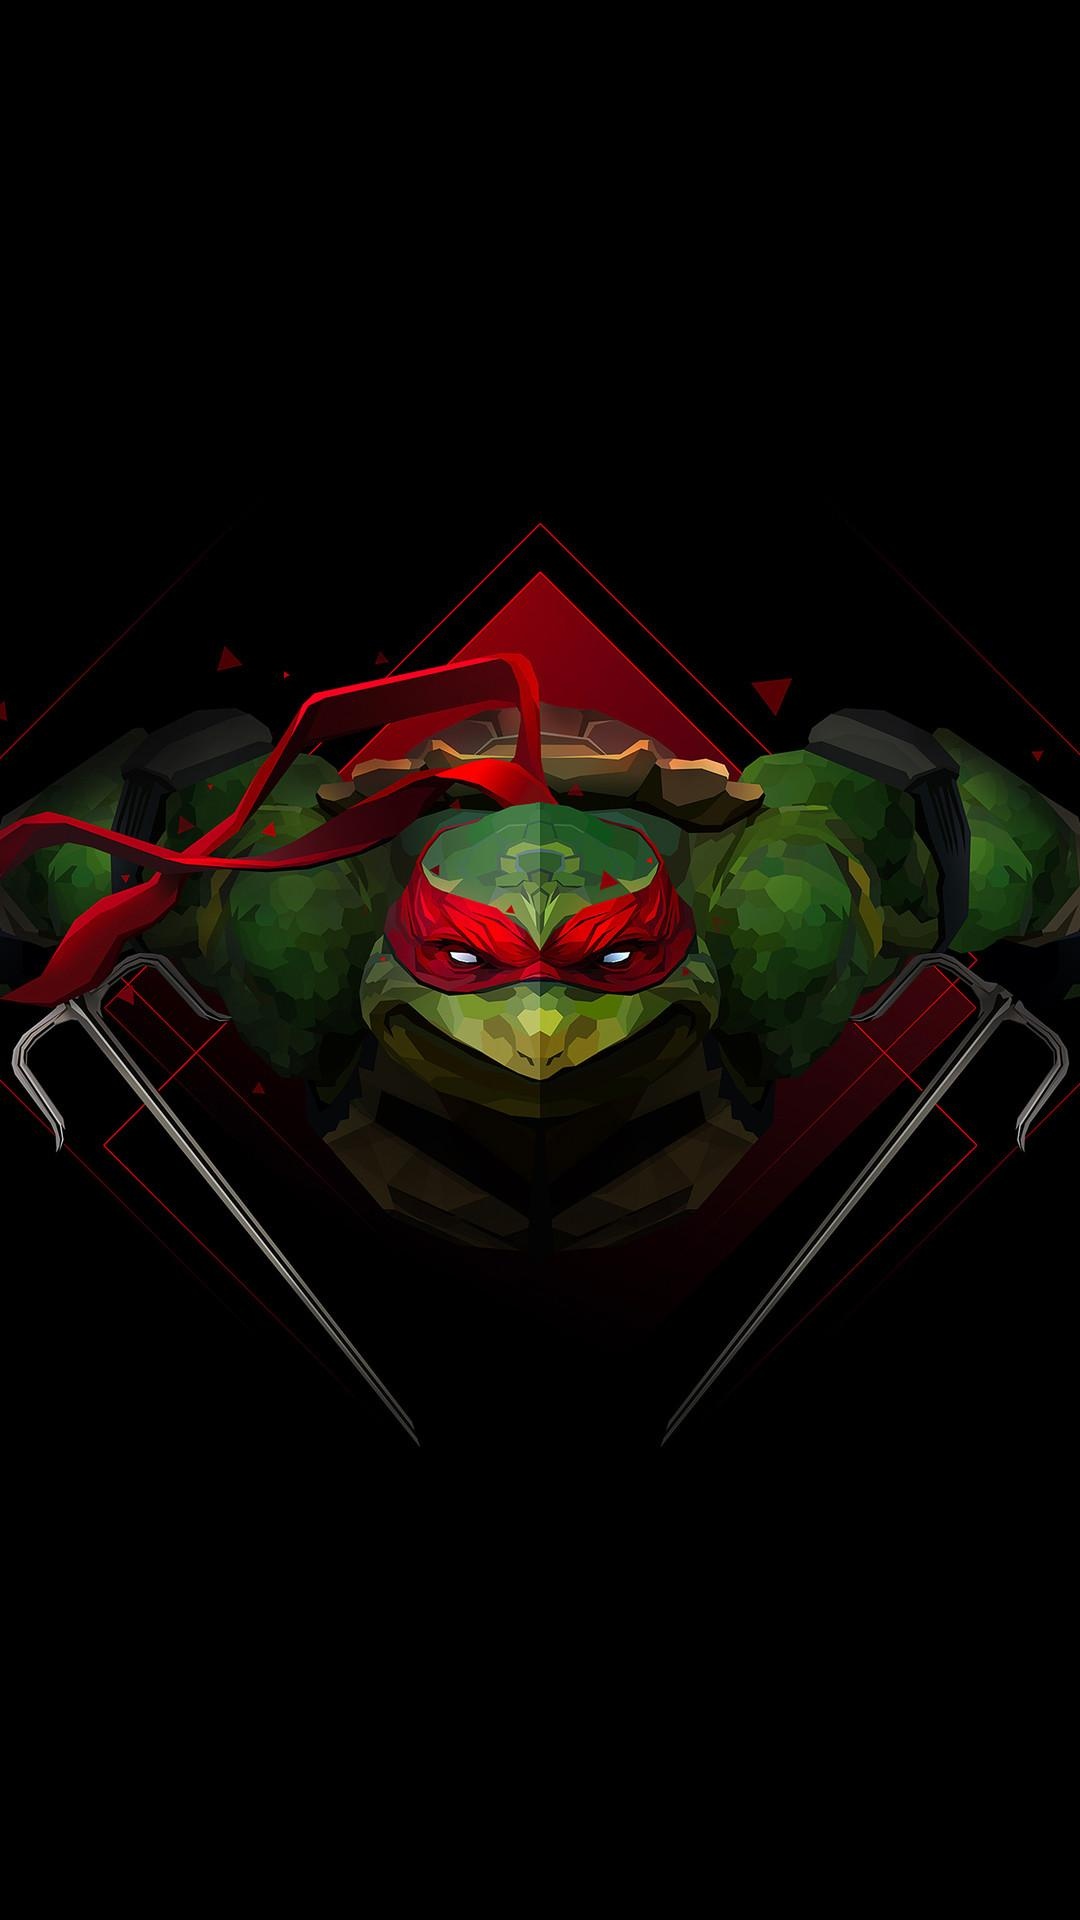 Mutant Ninja Turtles, Full HD iPhone wallpapers, Animated heroes, Turtle power, 1080x1920 Full HD Phone